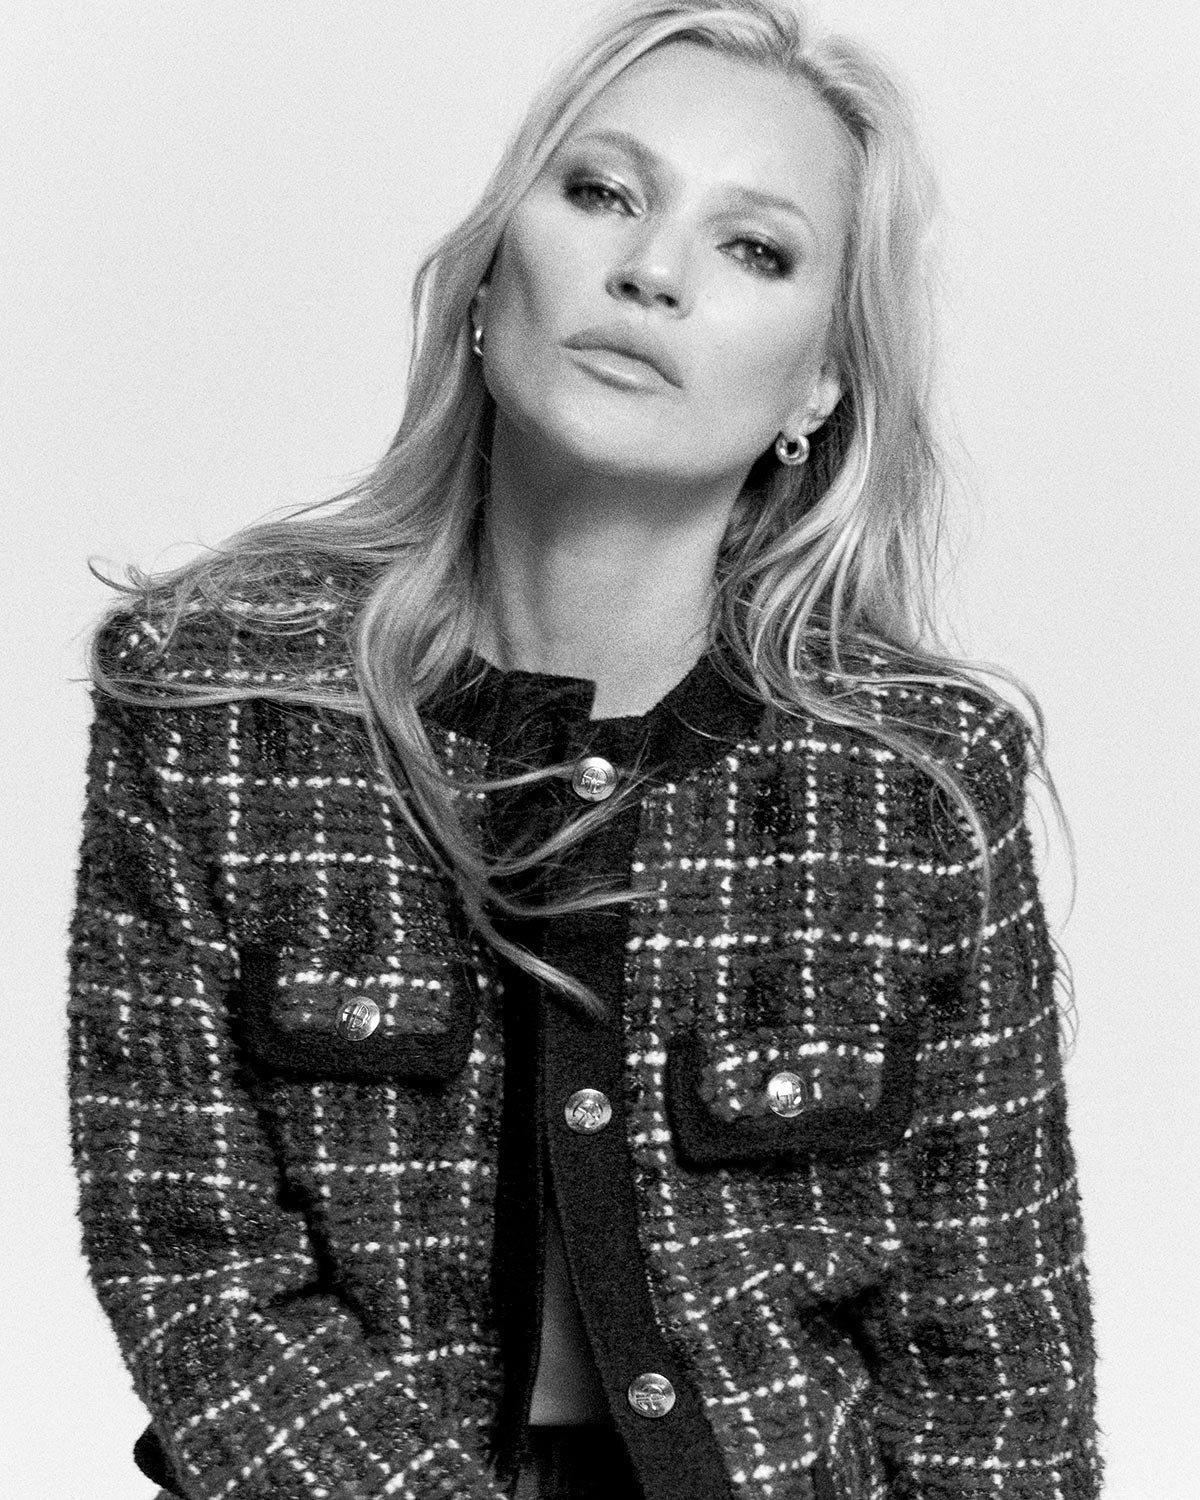 Veste en tweed esprit Chanel Lydia Anine Bing. Collaboration Anine Bing x Kate Moss.